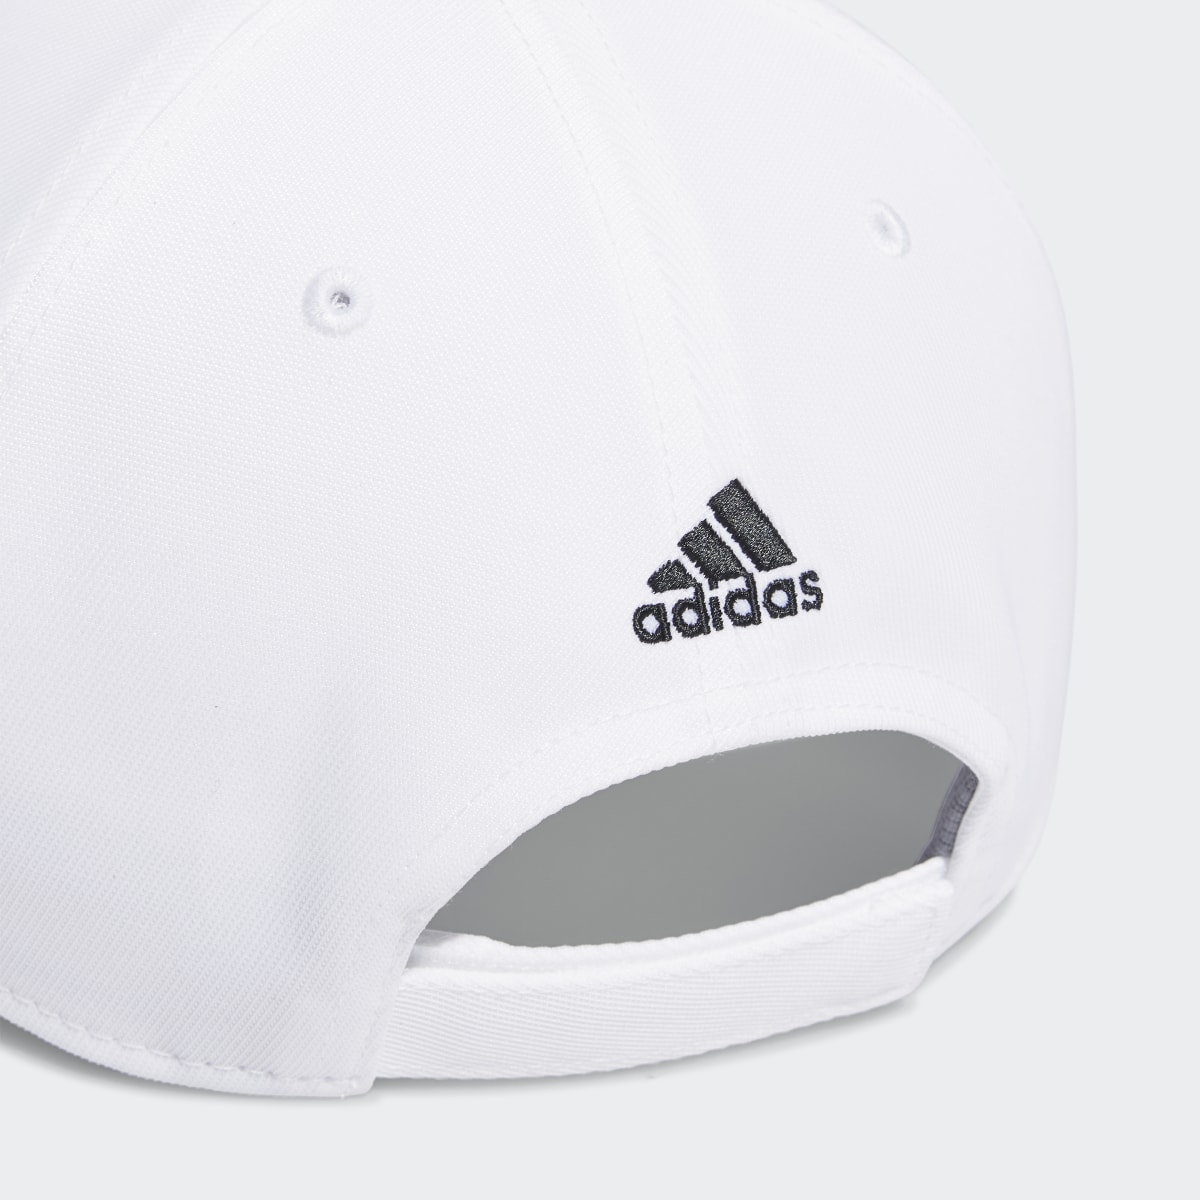 Adidas Decision Hat. 7